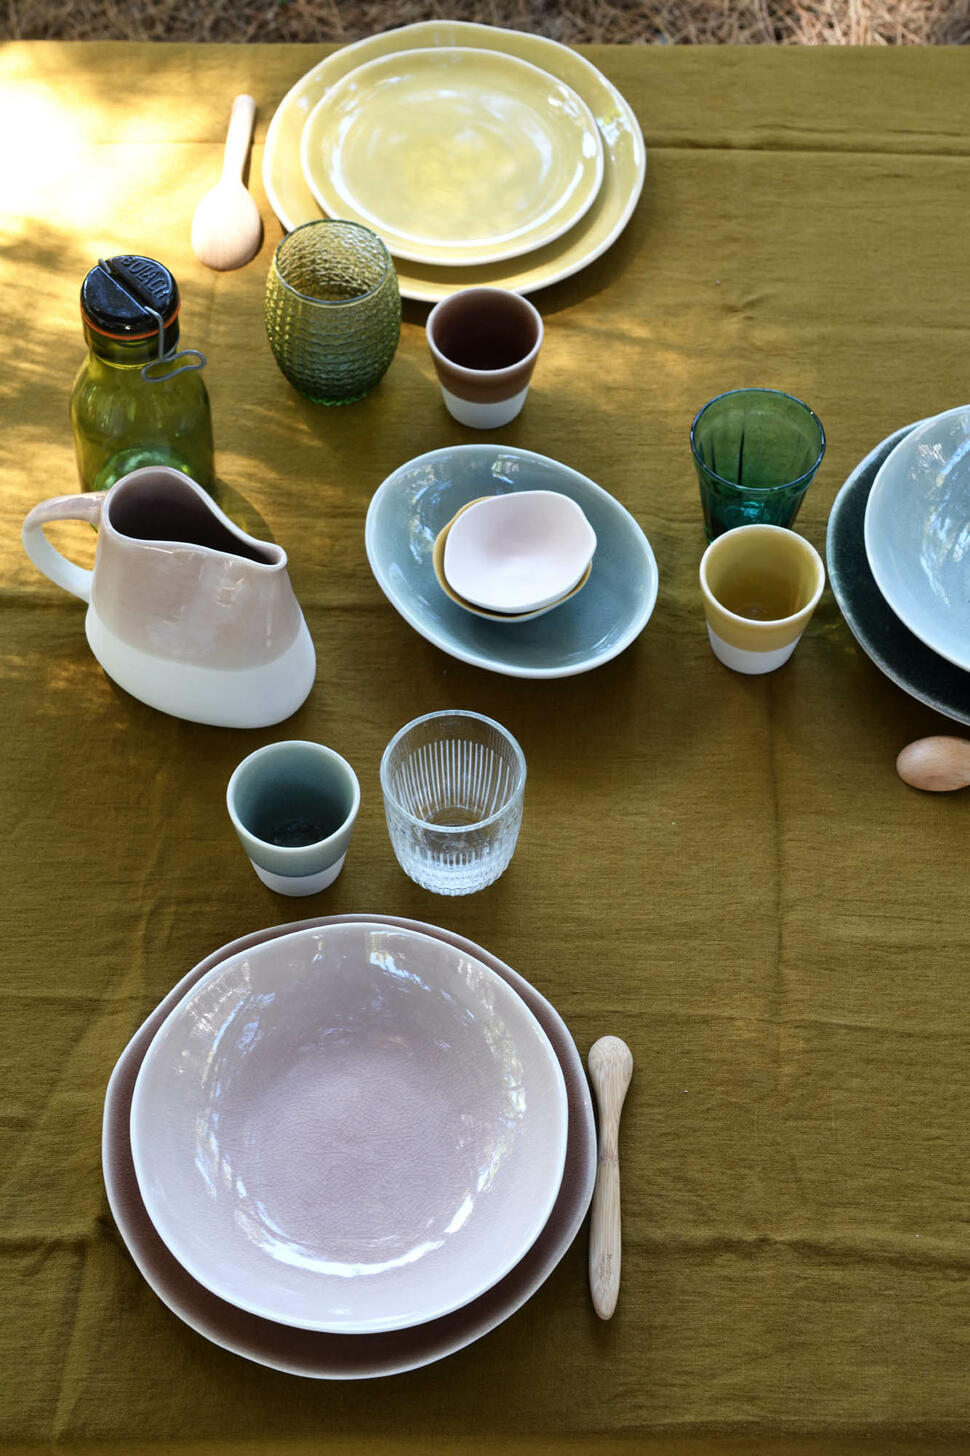 plate l maguelone tamaris ceramic manufacturer